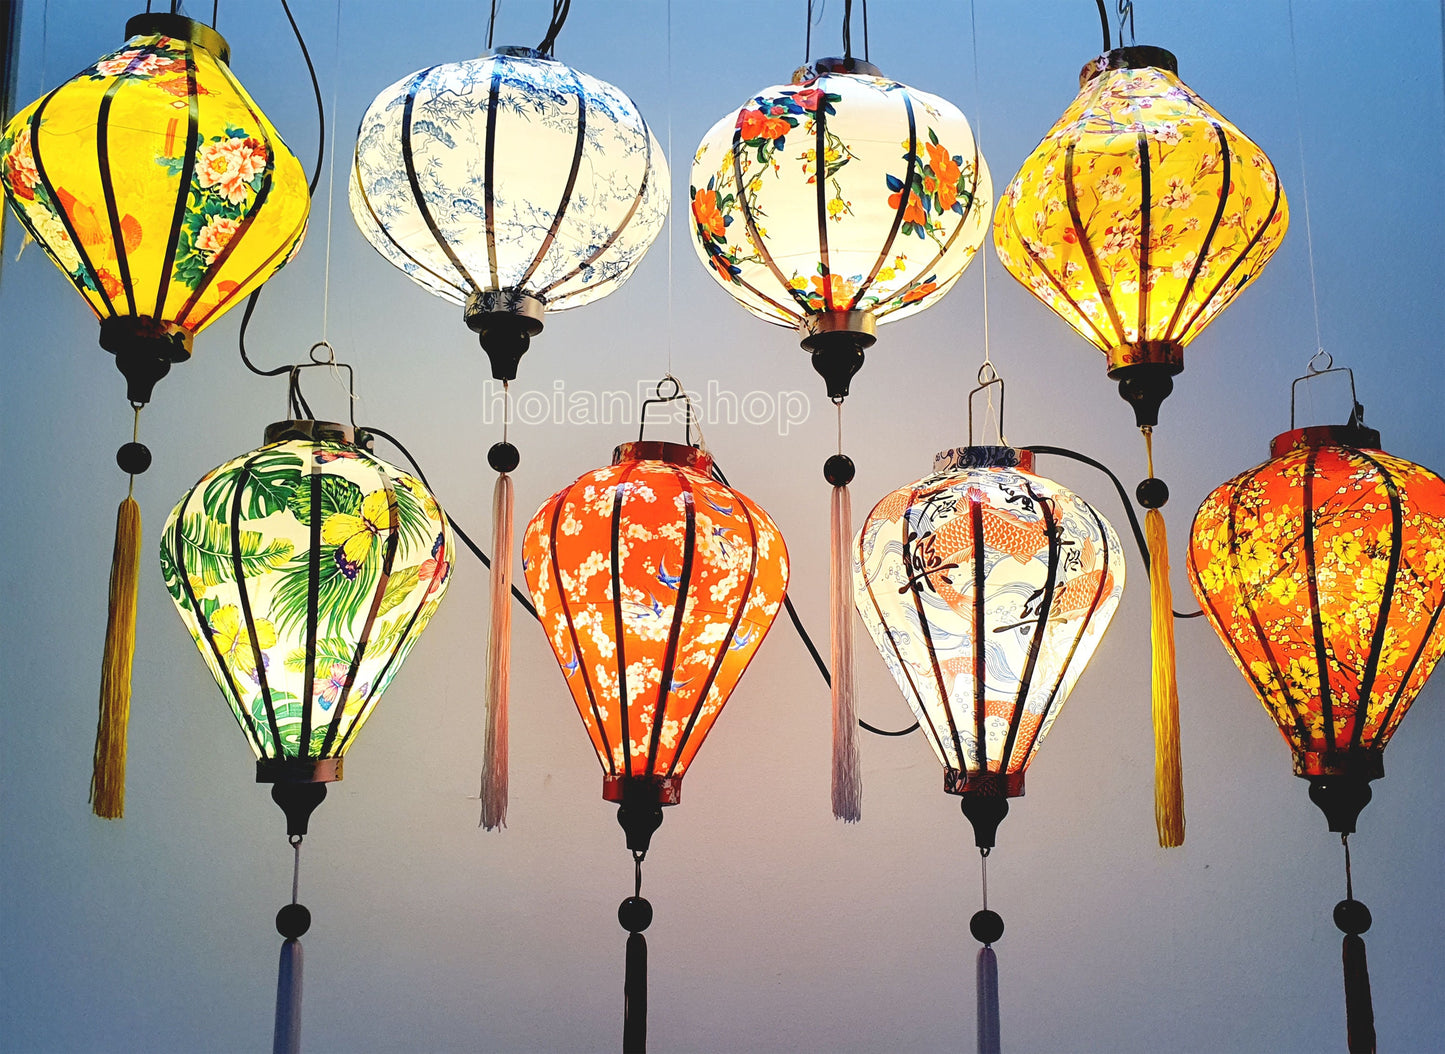 Set 8 Bamboo Silk Lanterns 35cm - Wedding decor - Lanterns for Patio decor - Living room decor - Restaurant decorations -Mix shape and color